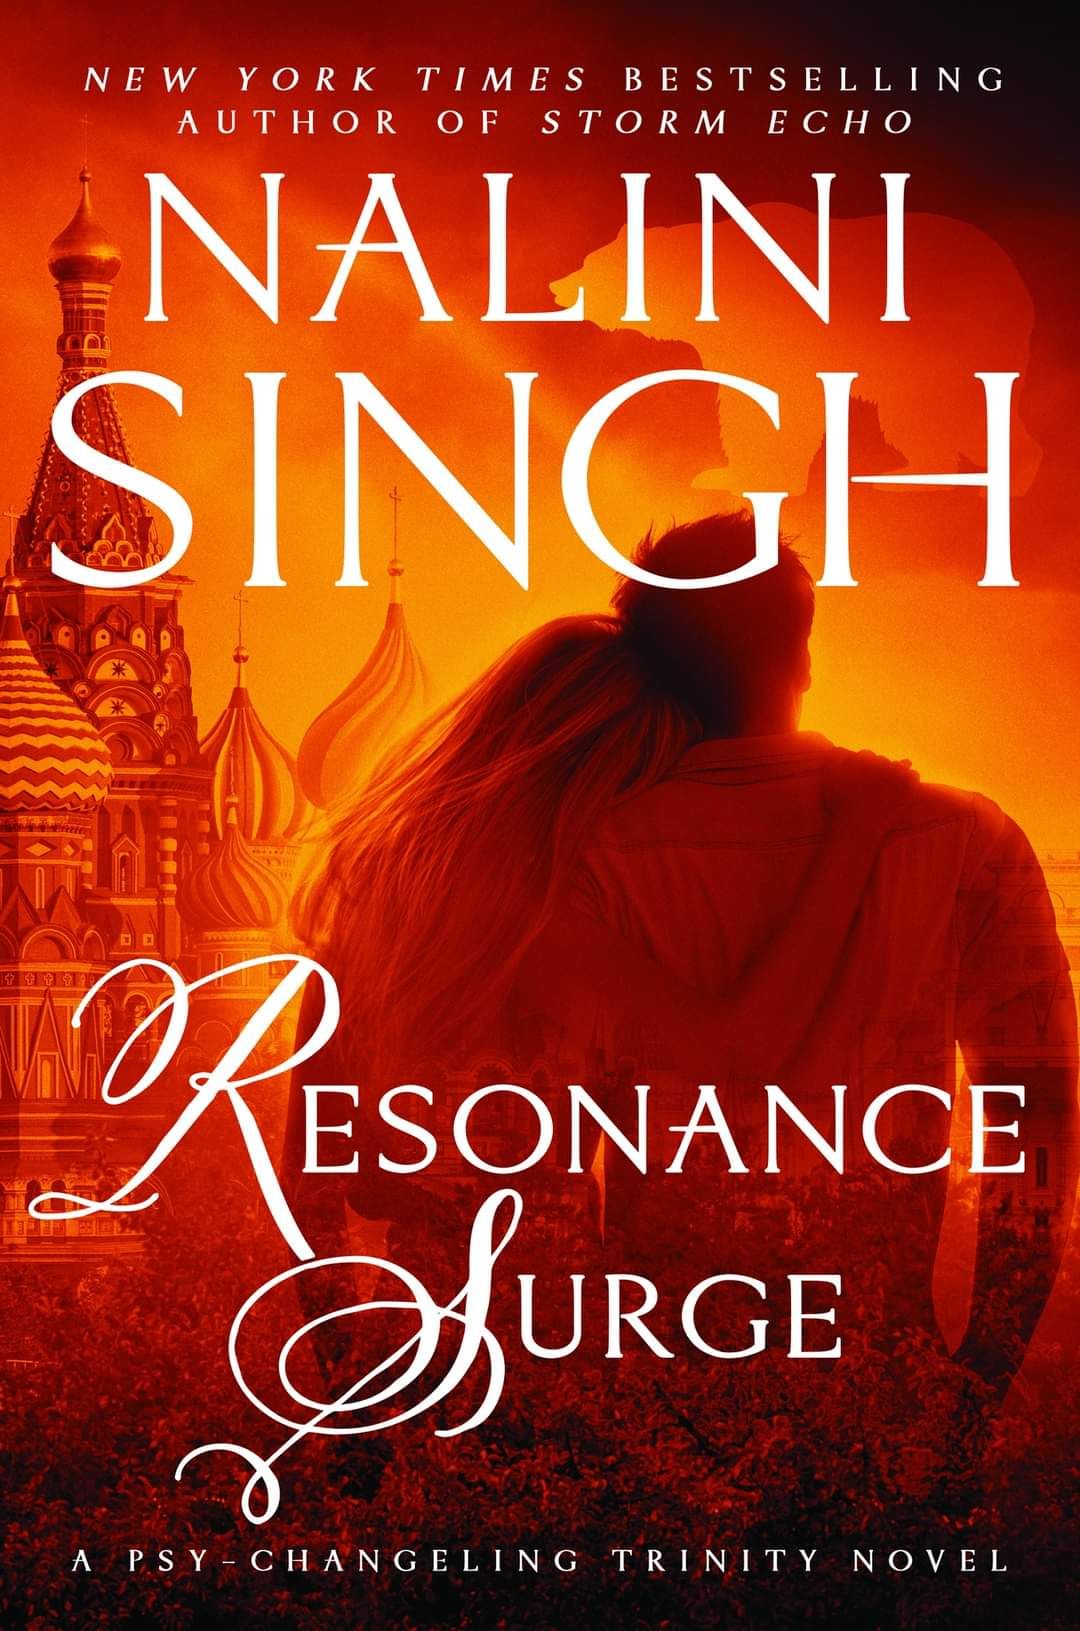 Resonance Surge by Nalini Singh Book Cover